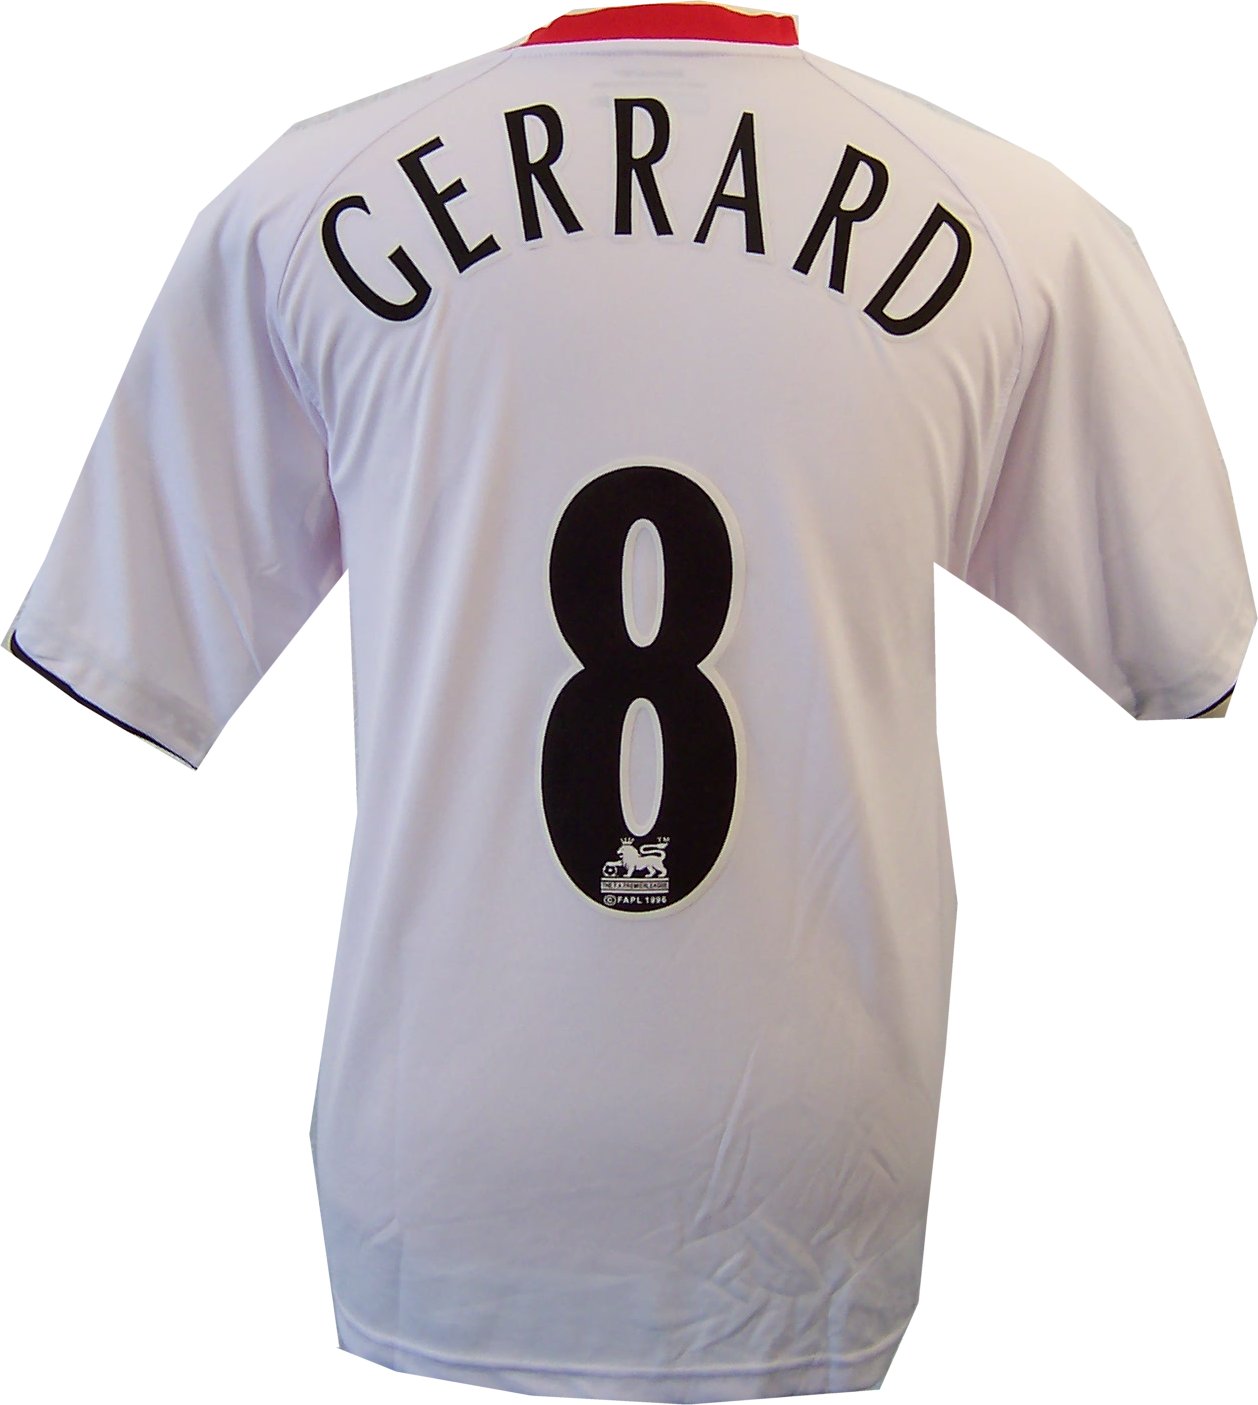 Gerrard Reebok Liverpool away (Gerrard 8) 05/06